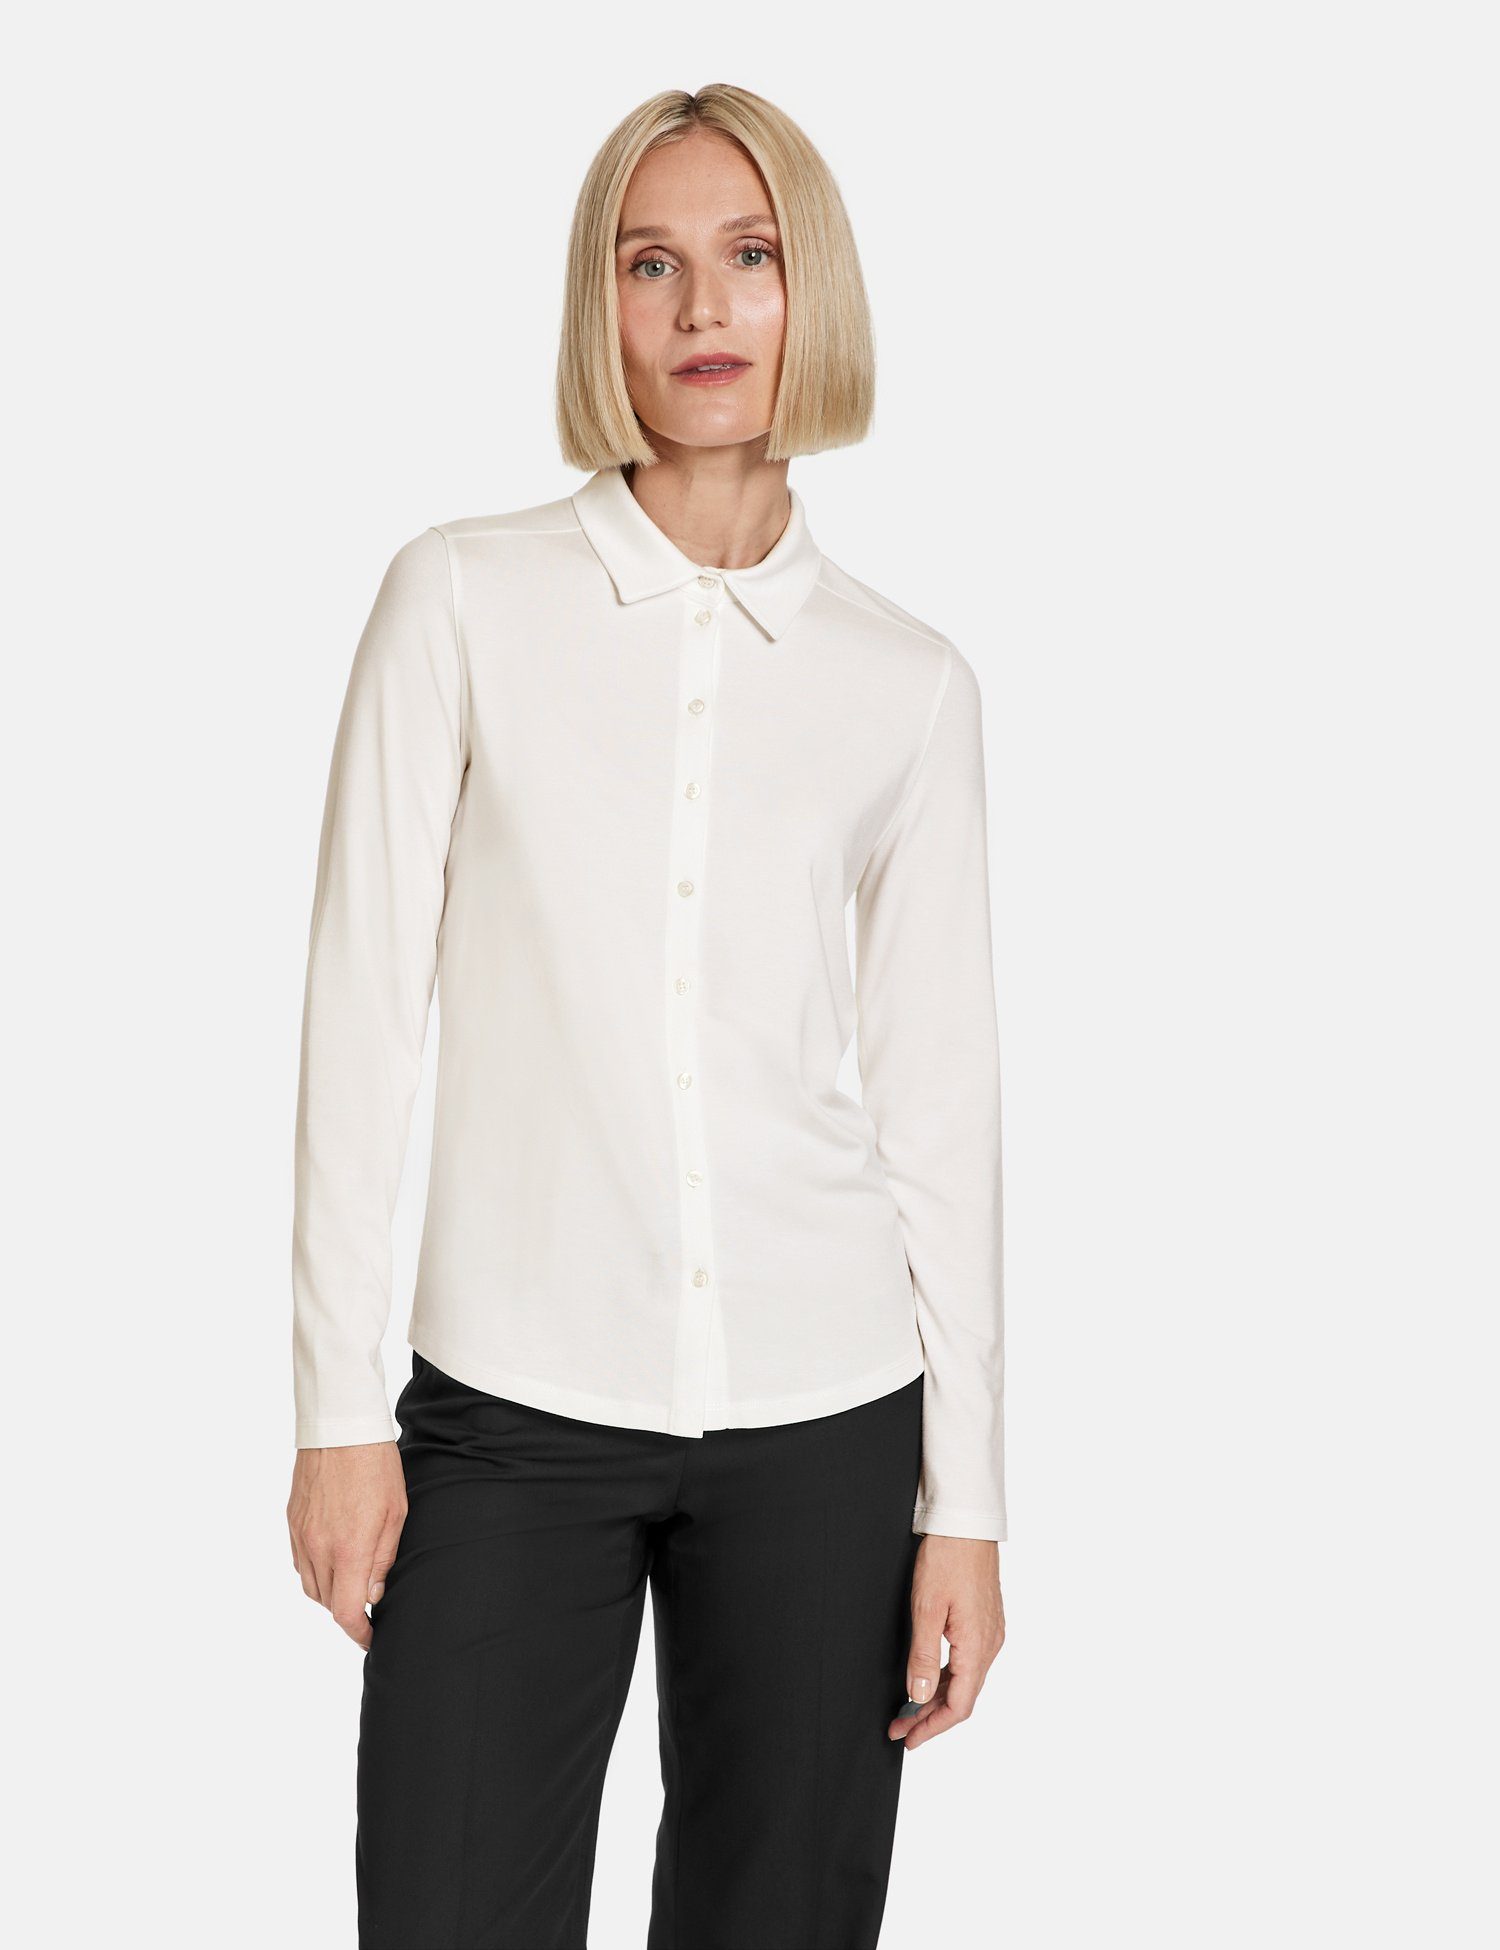 GERRY mit WEBER durchgehender Off-white Langarm Langarm-Poloshirt Knopfleiste Poloshirt